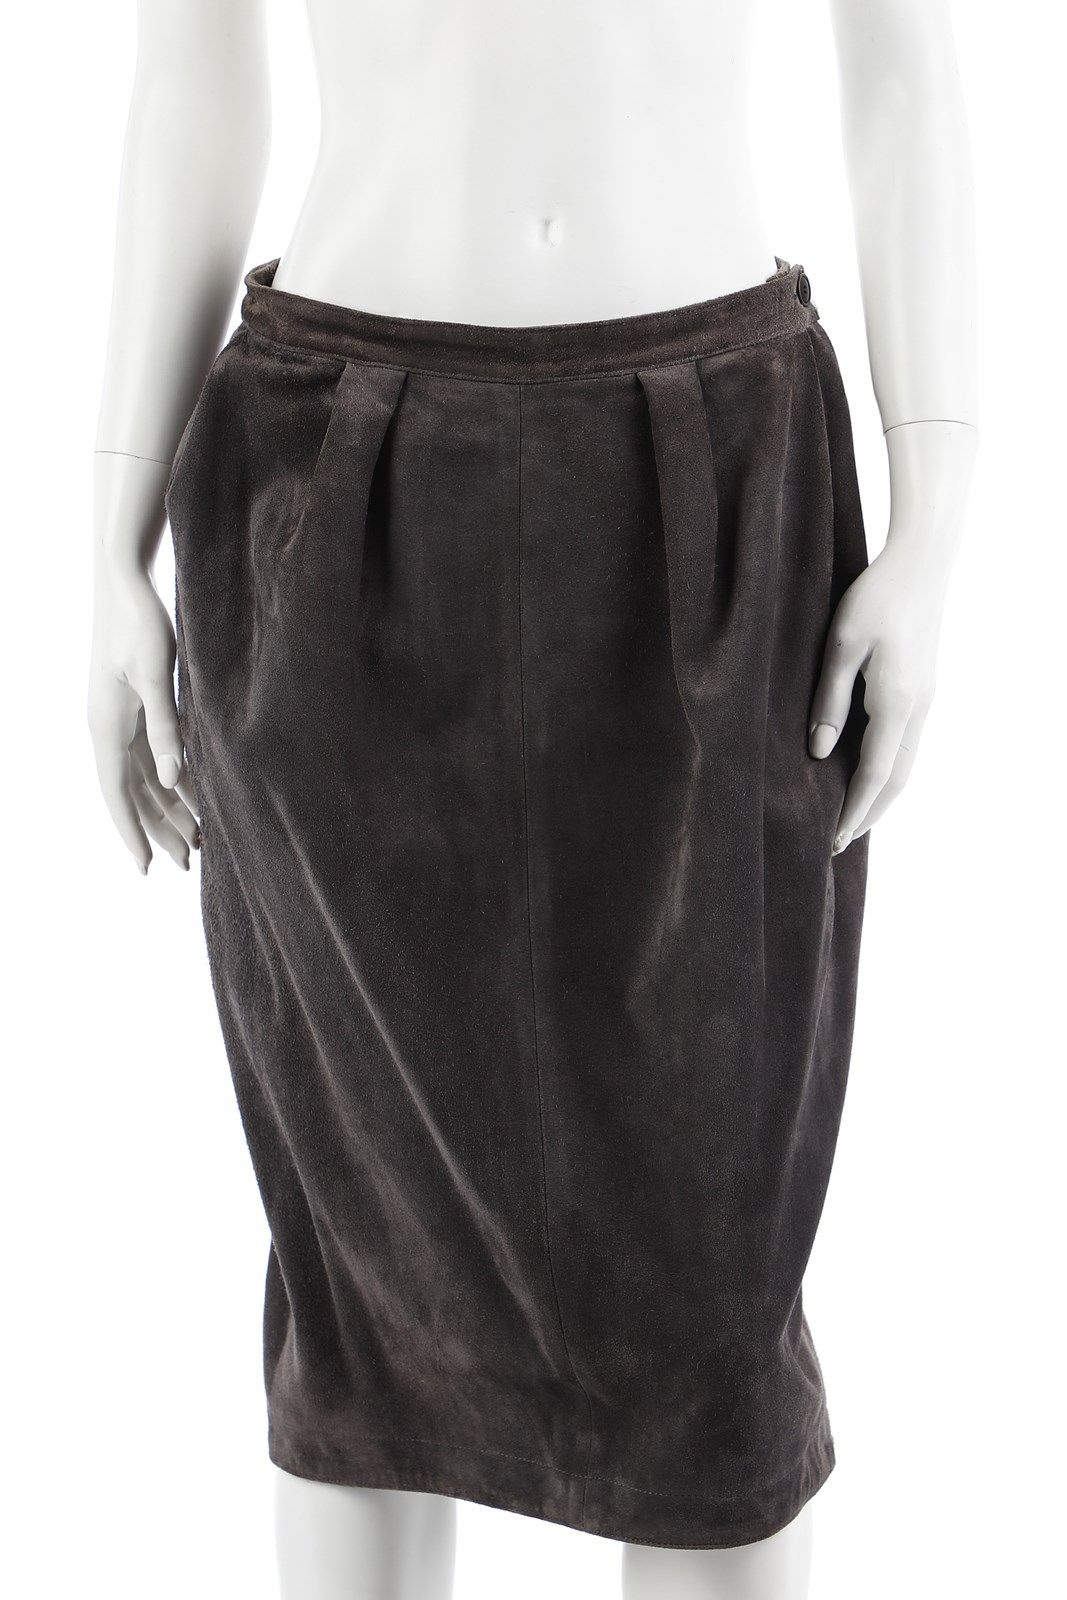 YVES SAINT LAURENT Gray suede leather midi skirt. Gray suede leather midi skirt.&hellip;